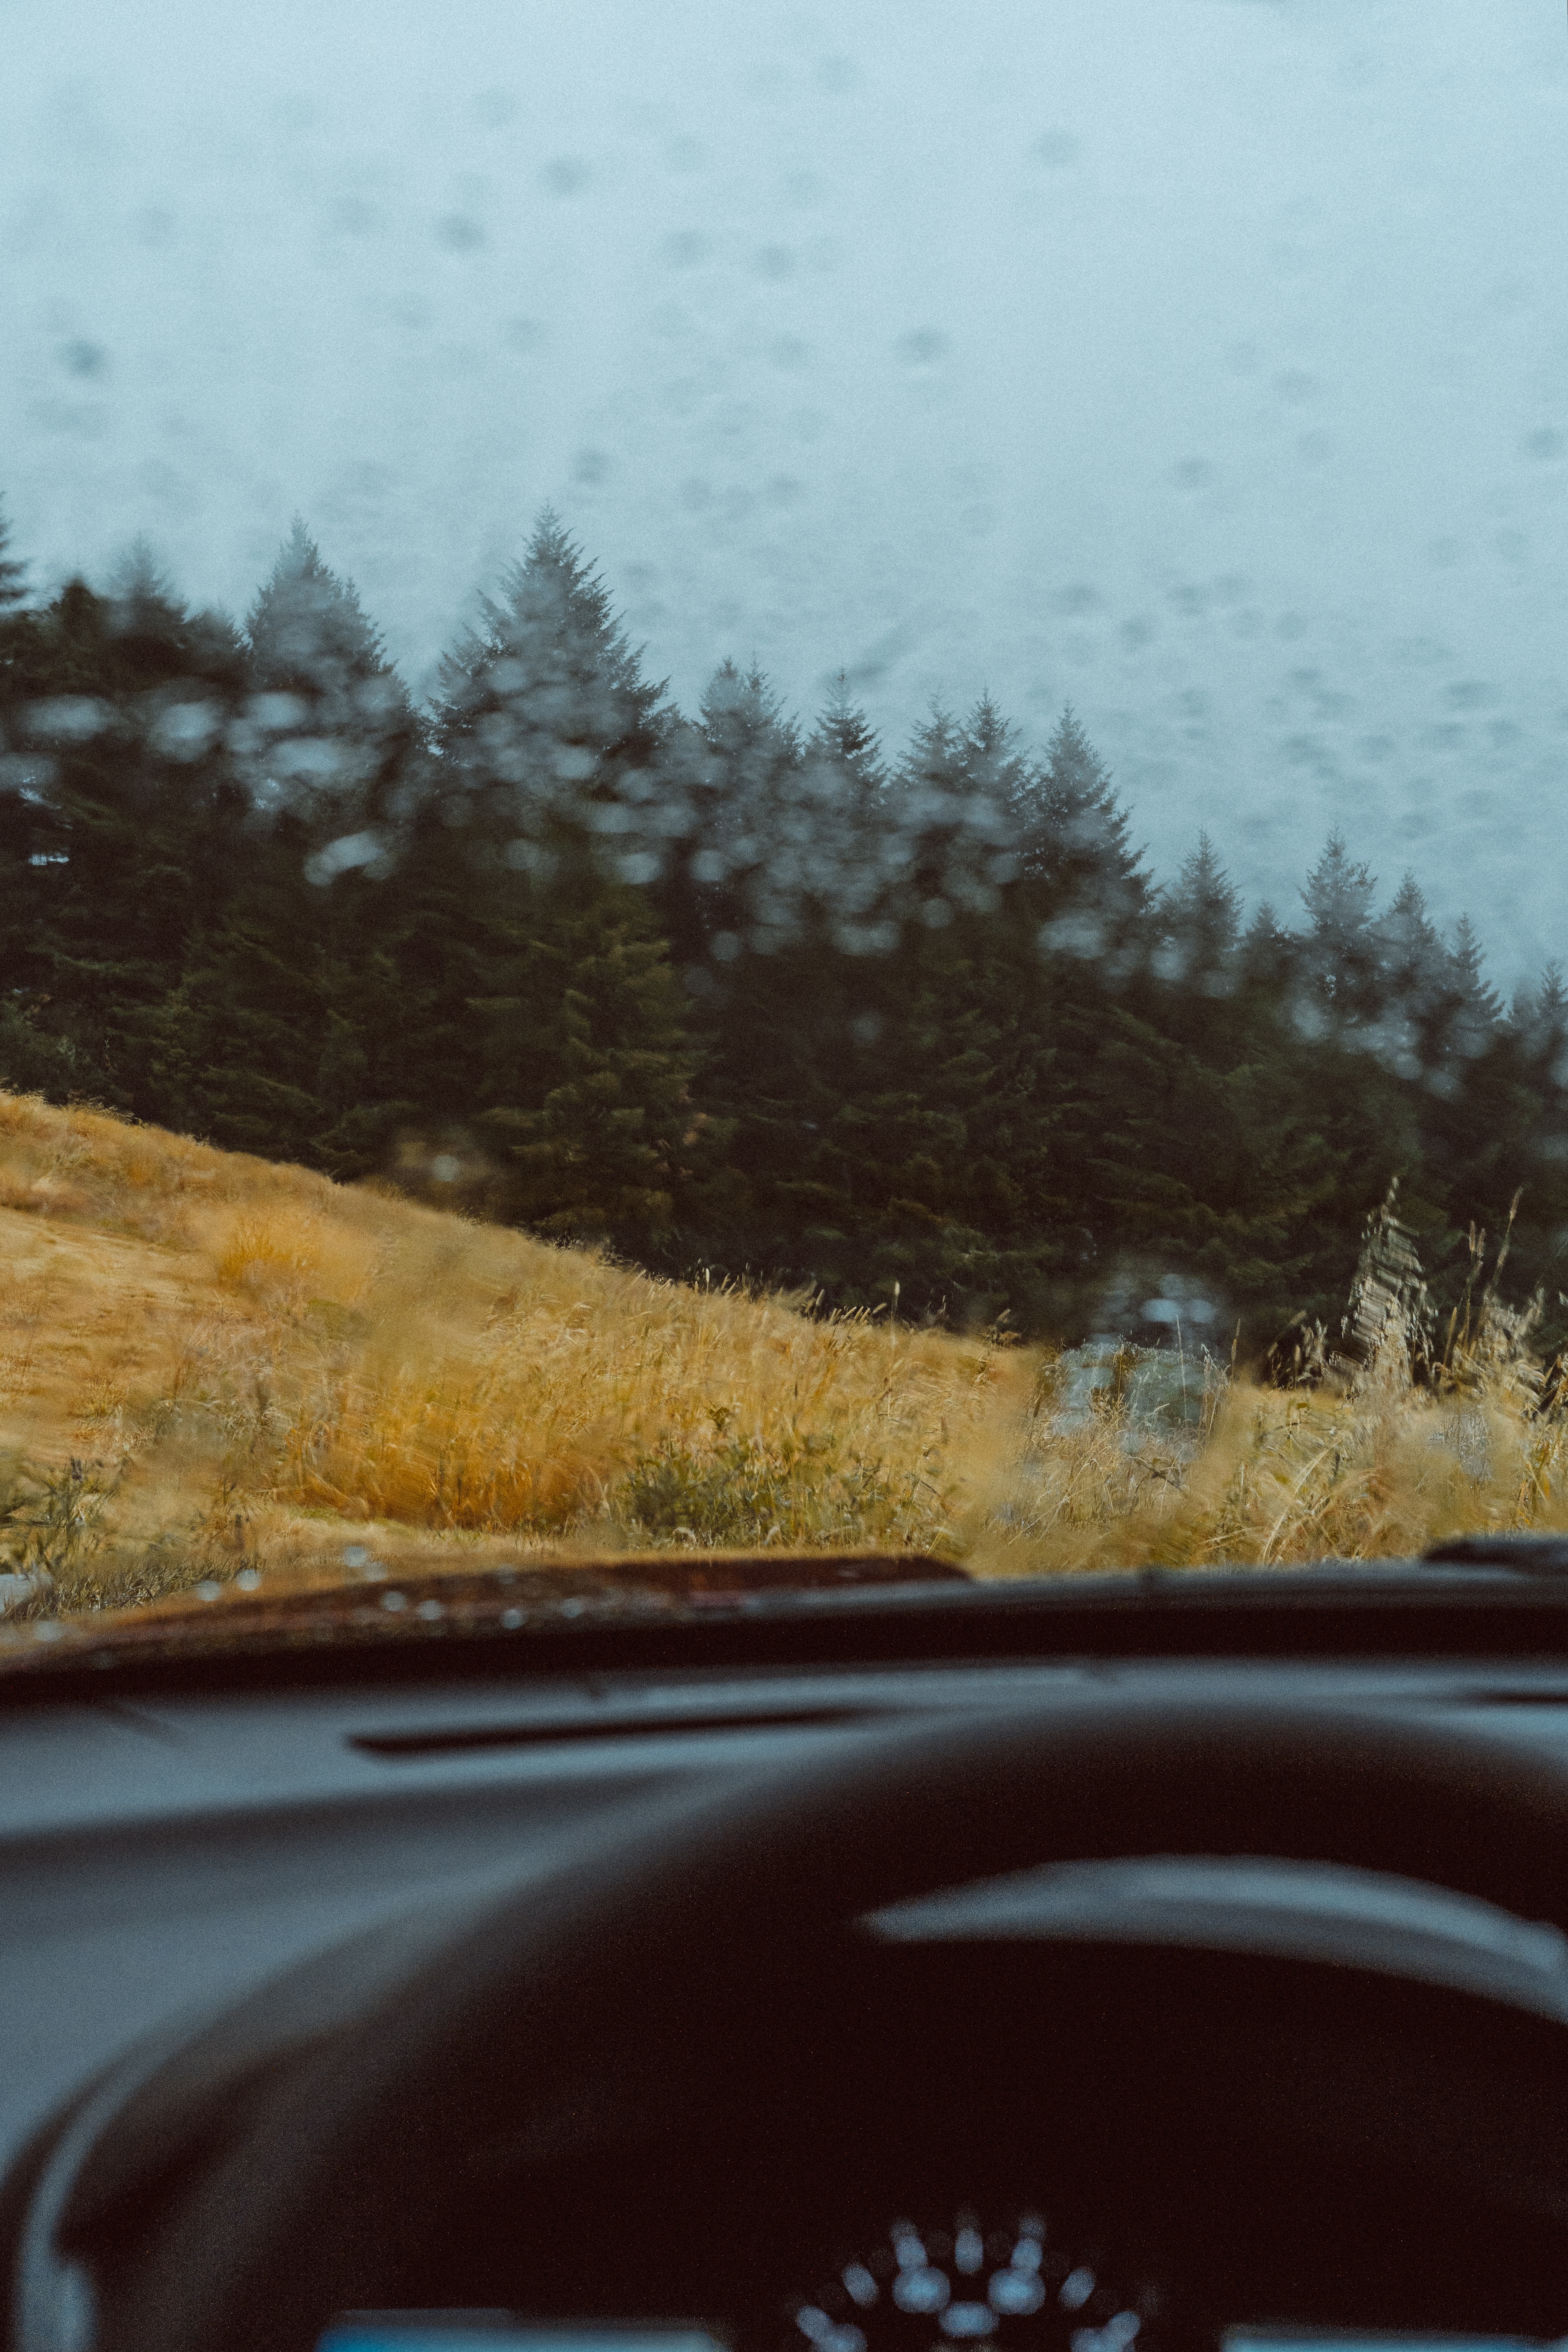 Download background rain, miscellanea, miscellaneous, forest, car, machine, glass, view